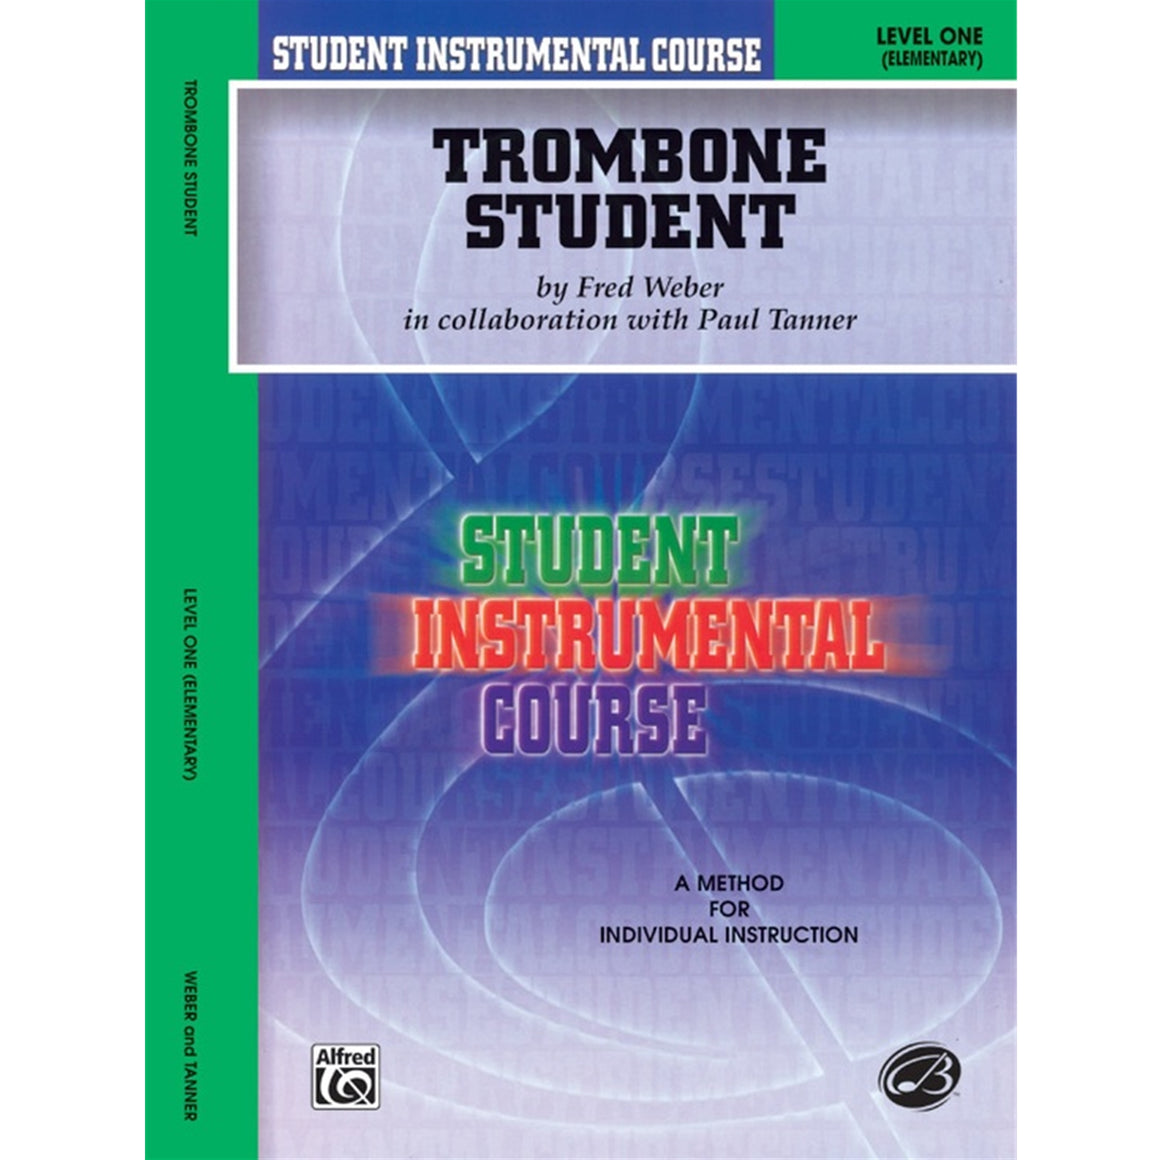 ALFRED BIC00156A Student Instrumental Course: Trombone Student, Level I [Trombone]